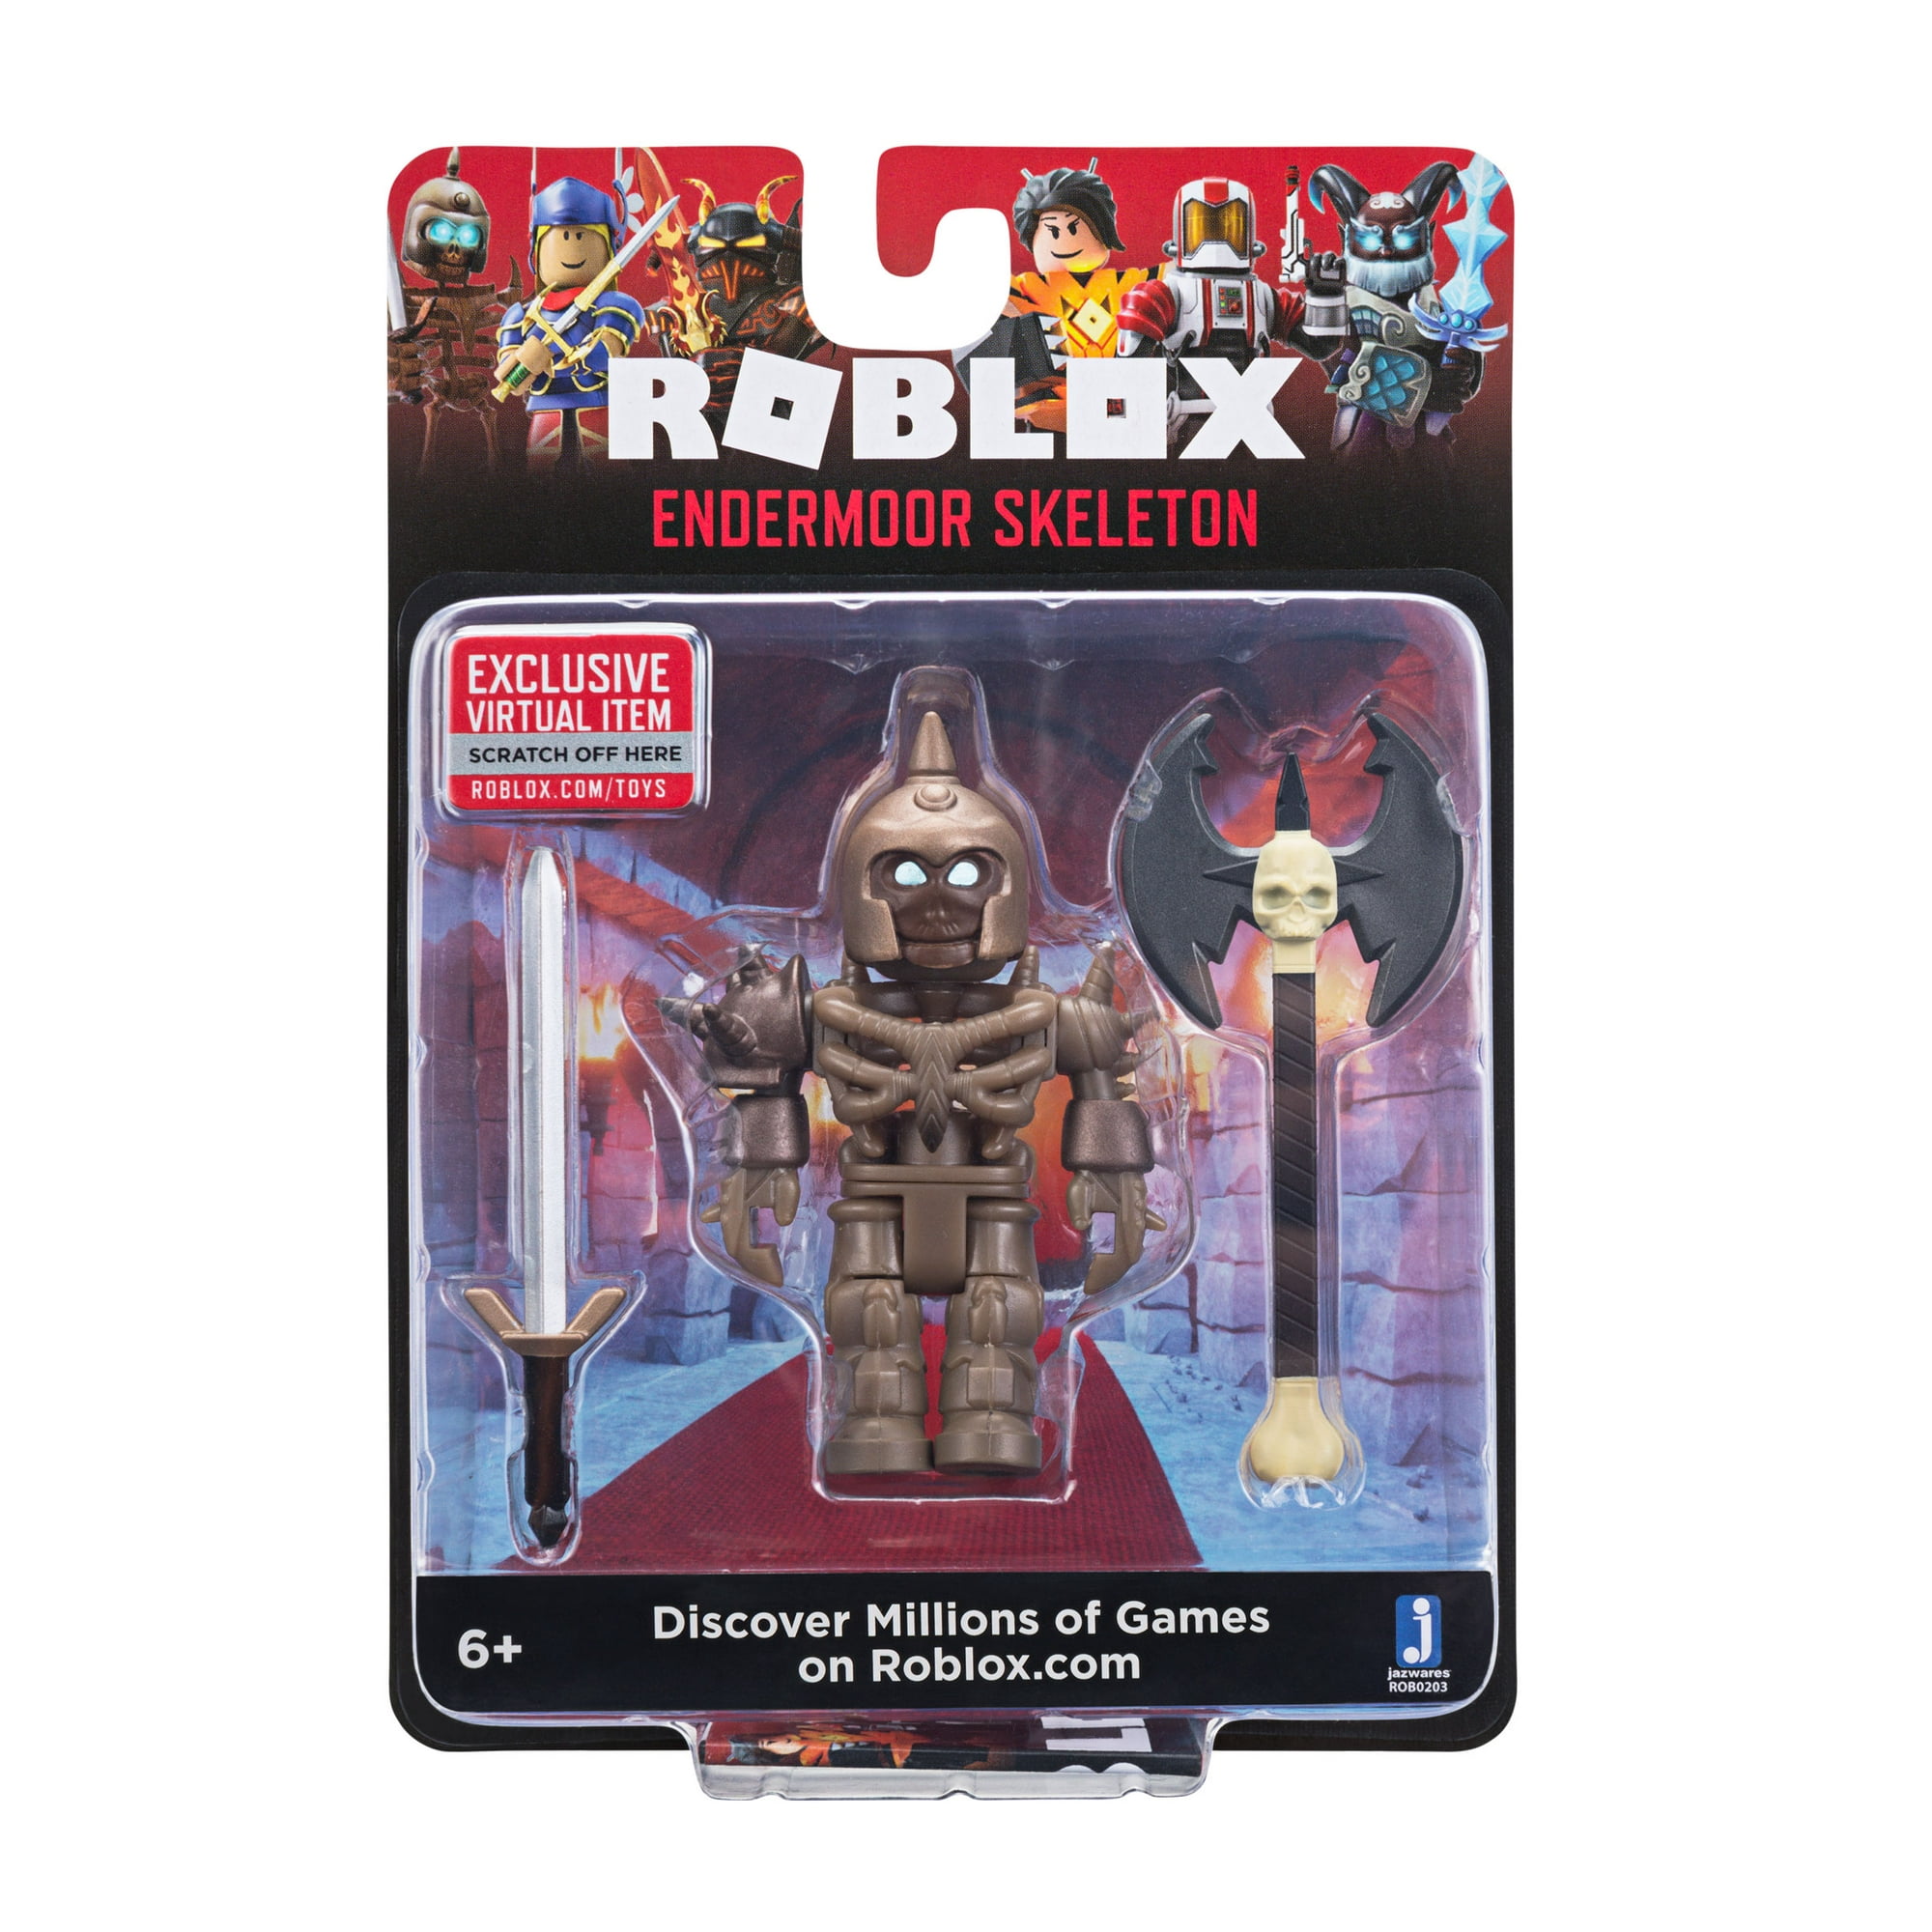 Roblox Action Collection Endermoor Skeleton Figure Pack Includes Exclusive Virtual Item Walmart Com Walmart Com - roblox core figures sun slayer w5 walmartcom